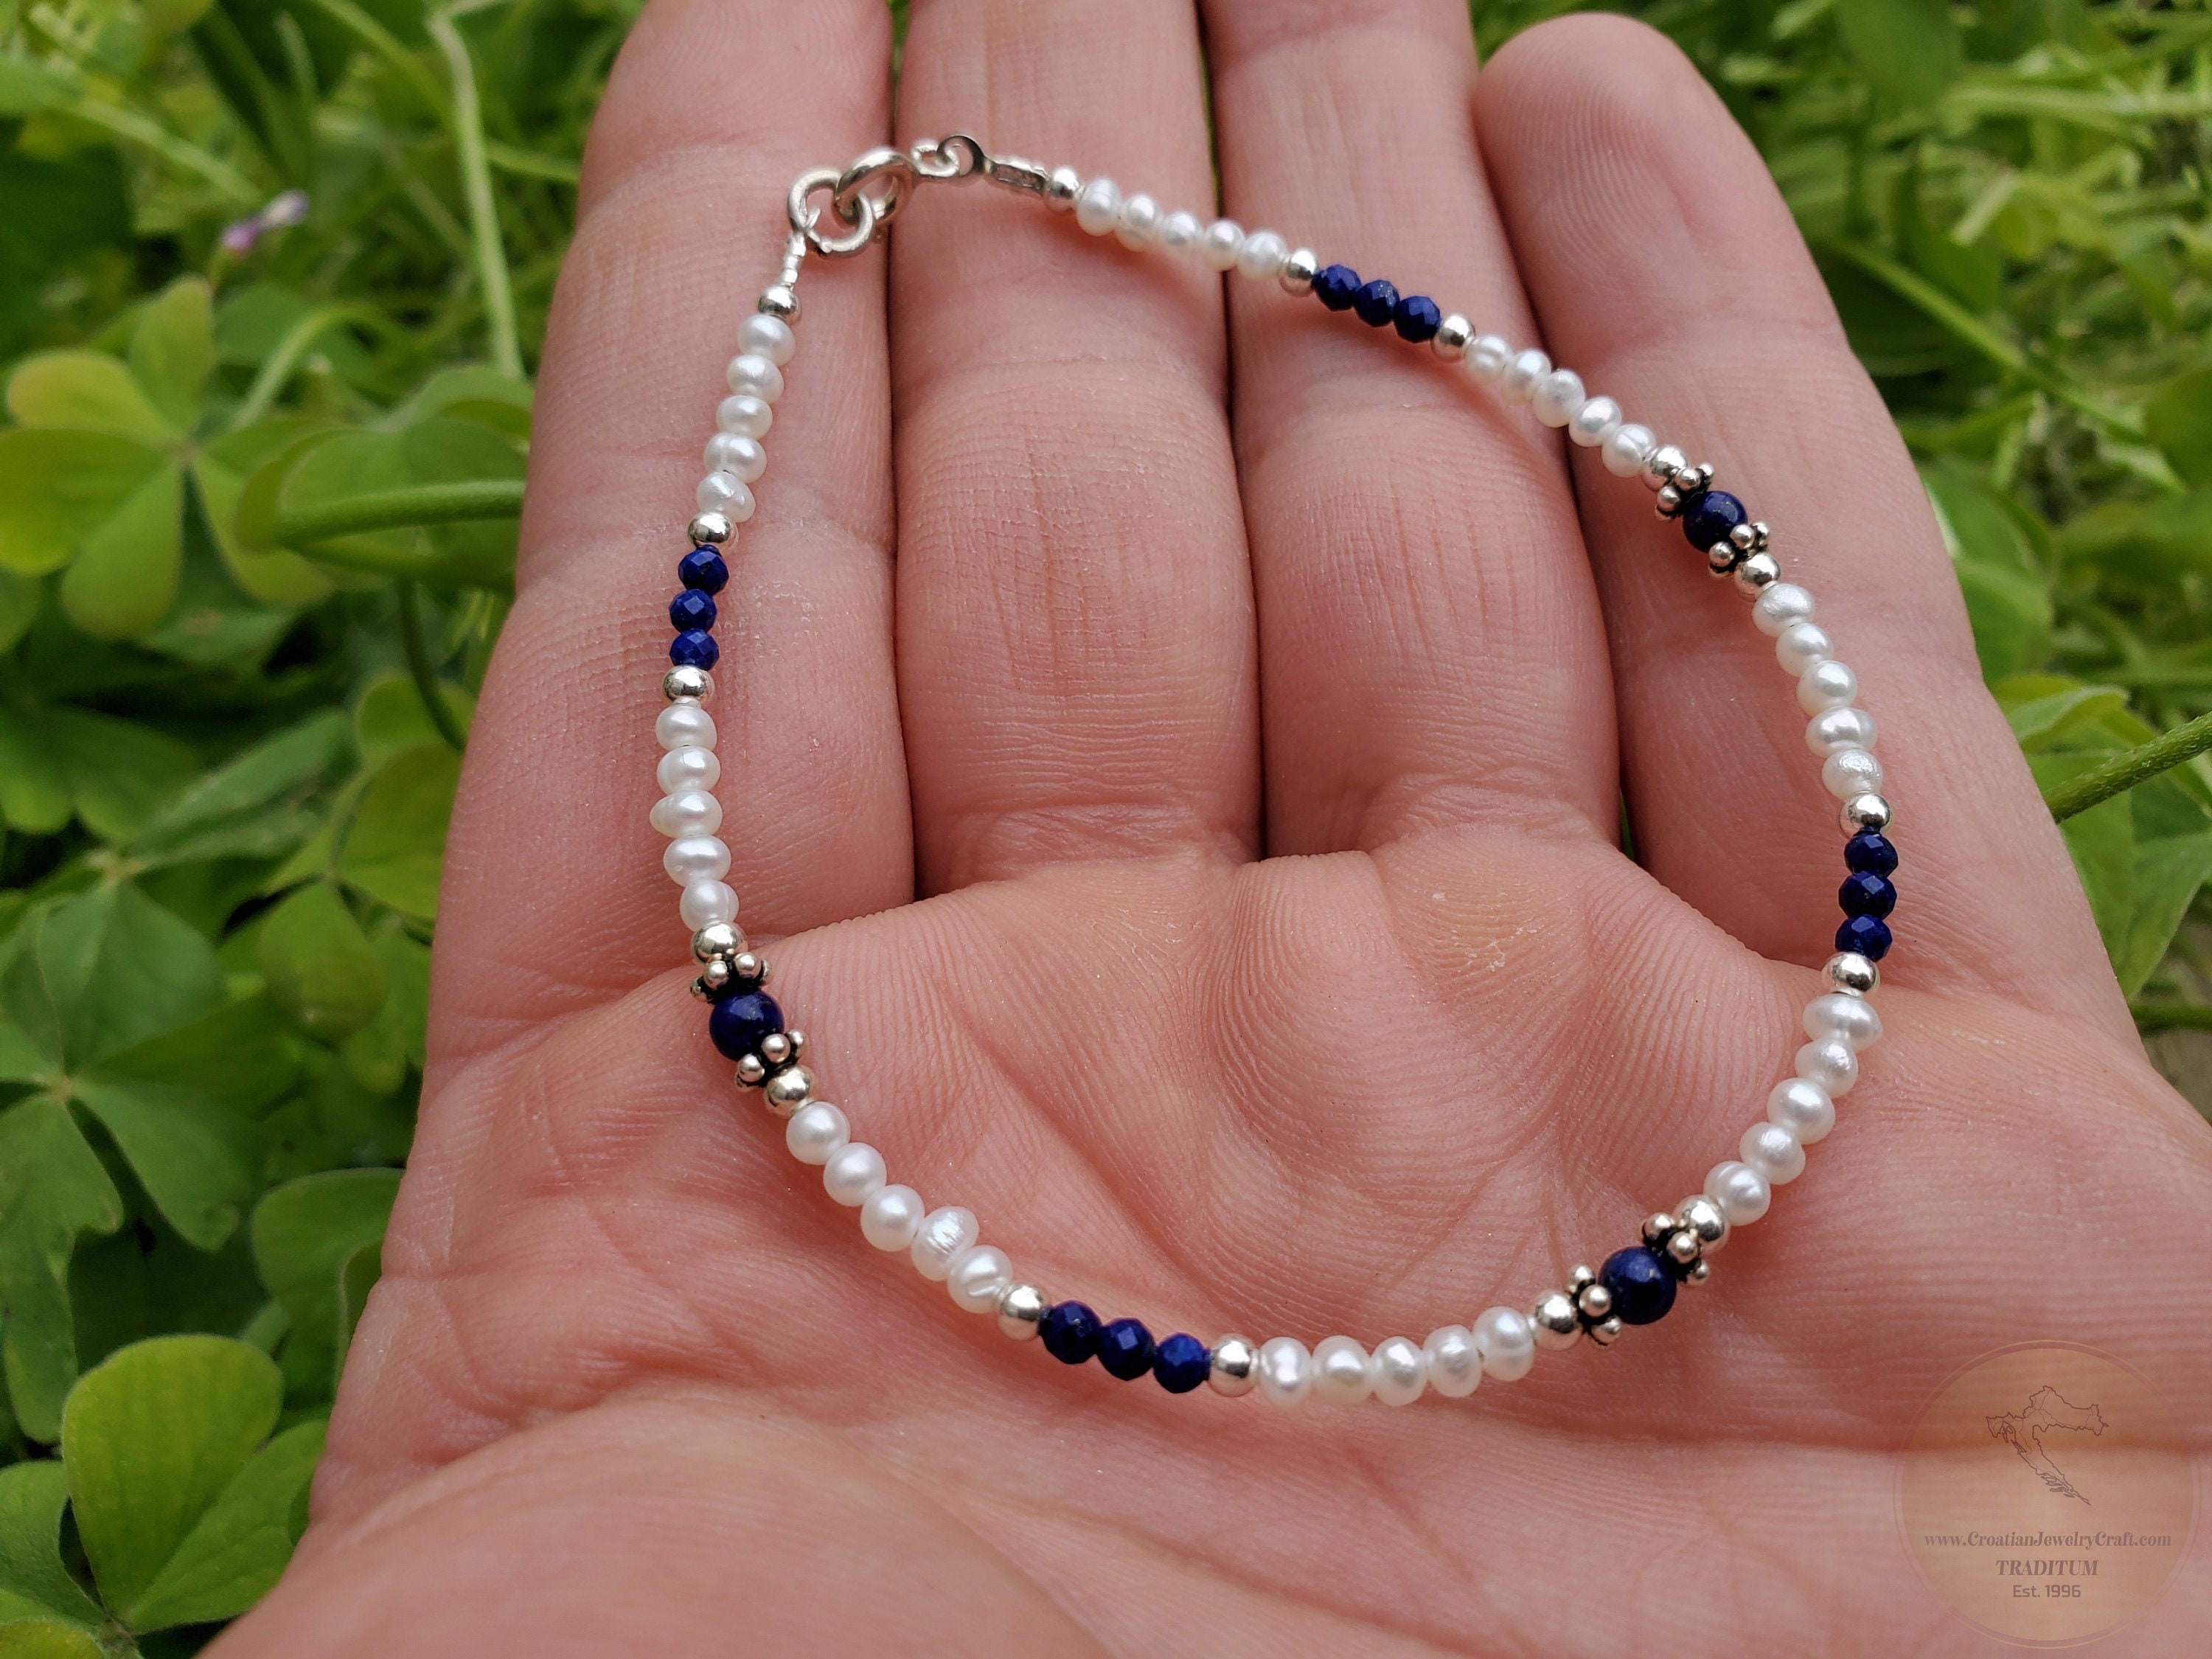 Bracelet Blue Beads 